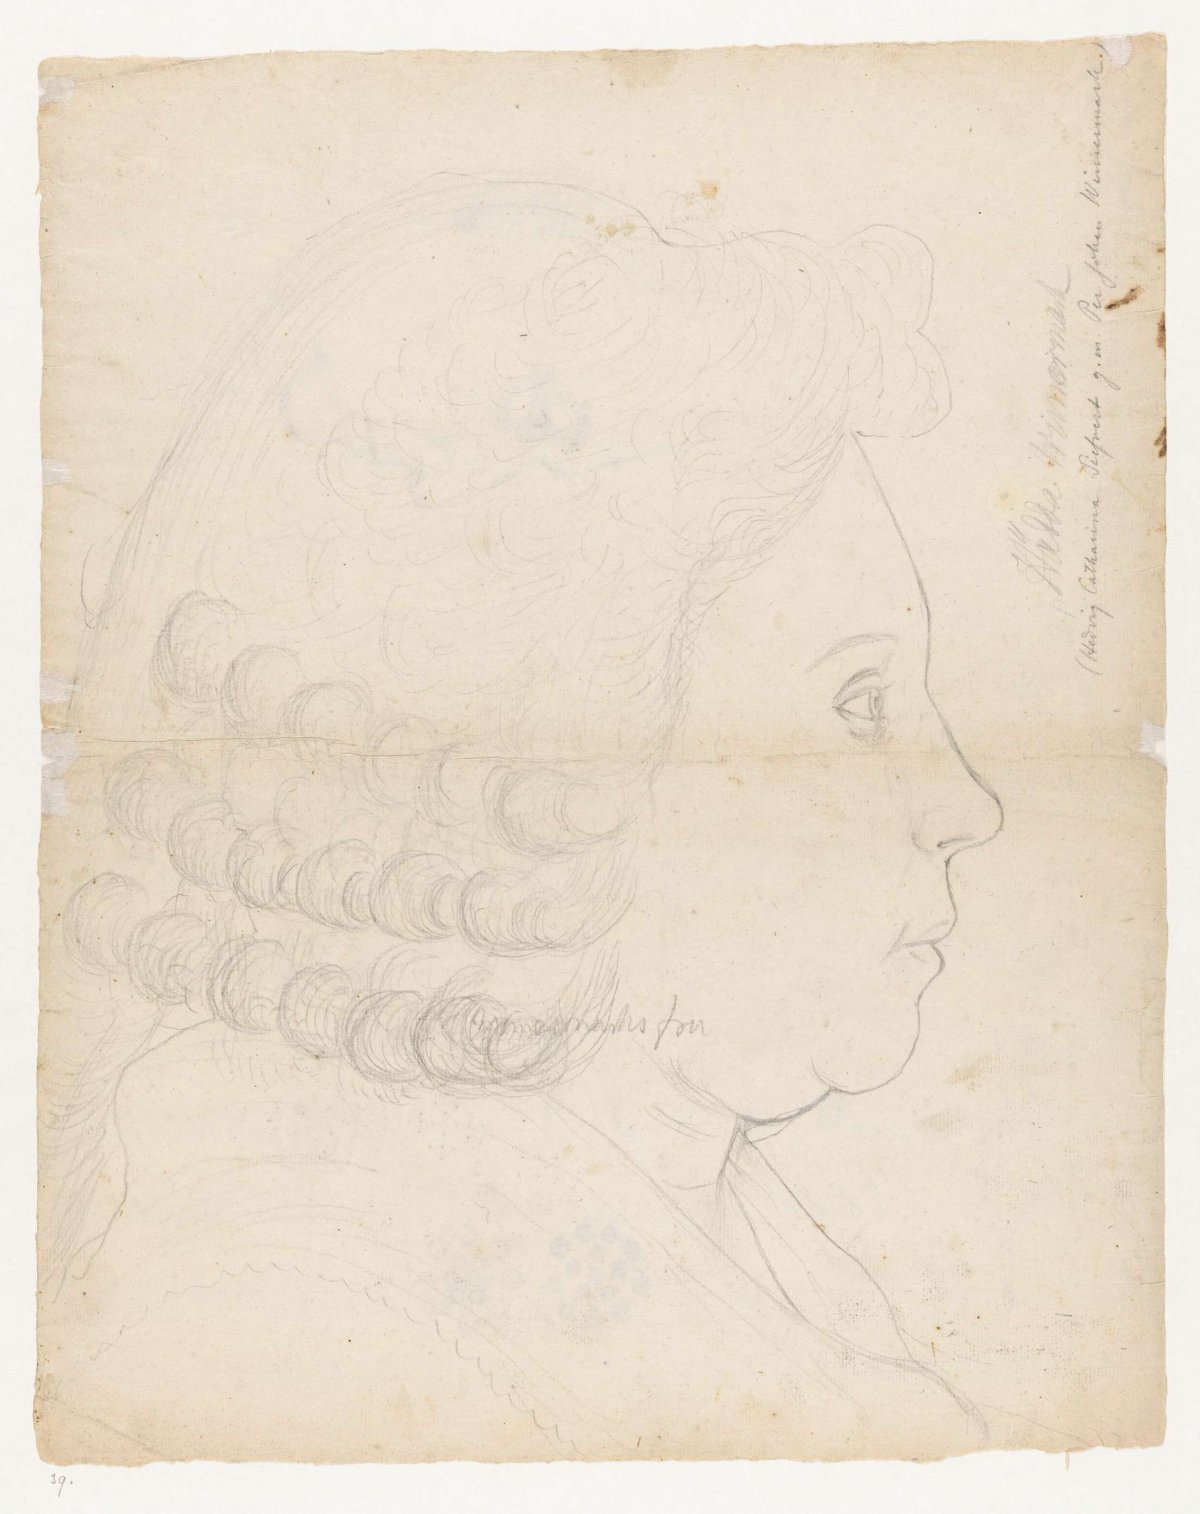 Portrait of Hedwig Catharina Wimermark, Jan Brandes, 1788 - 1806